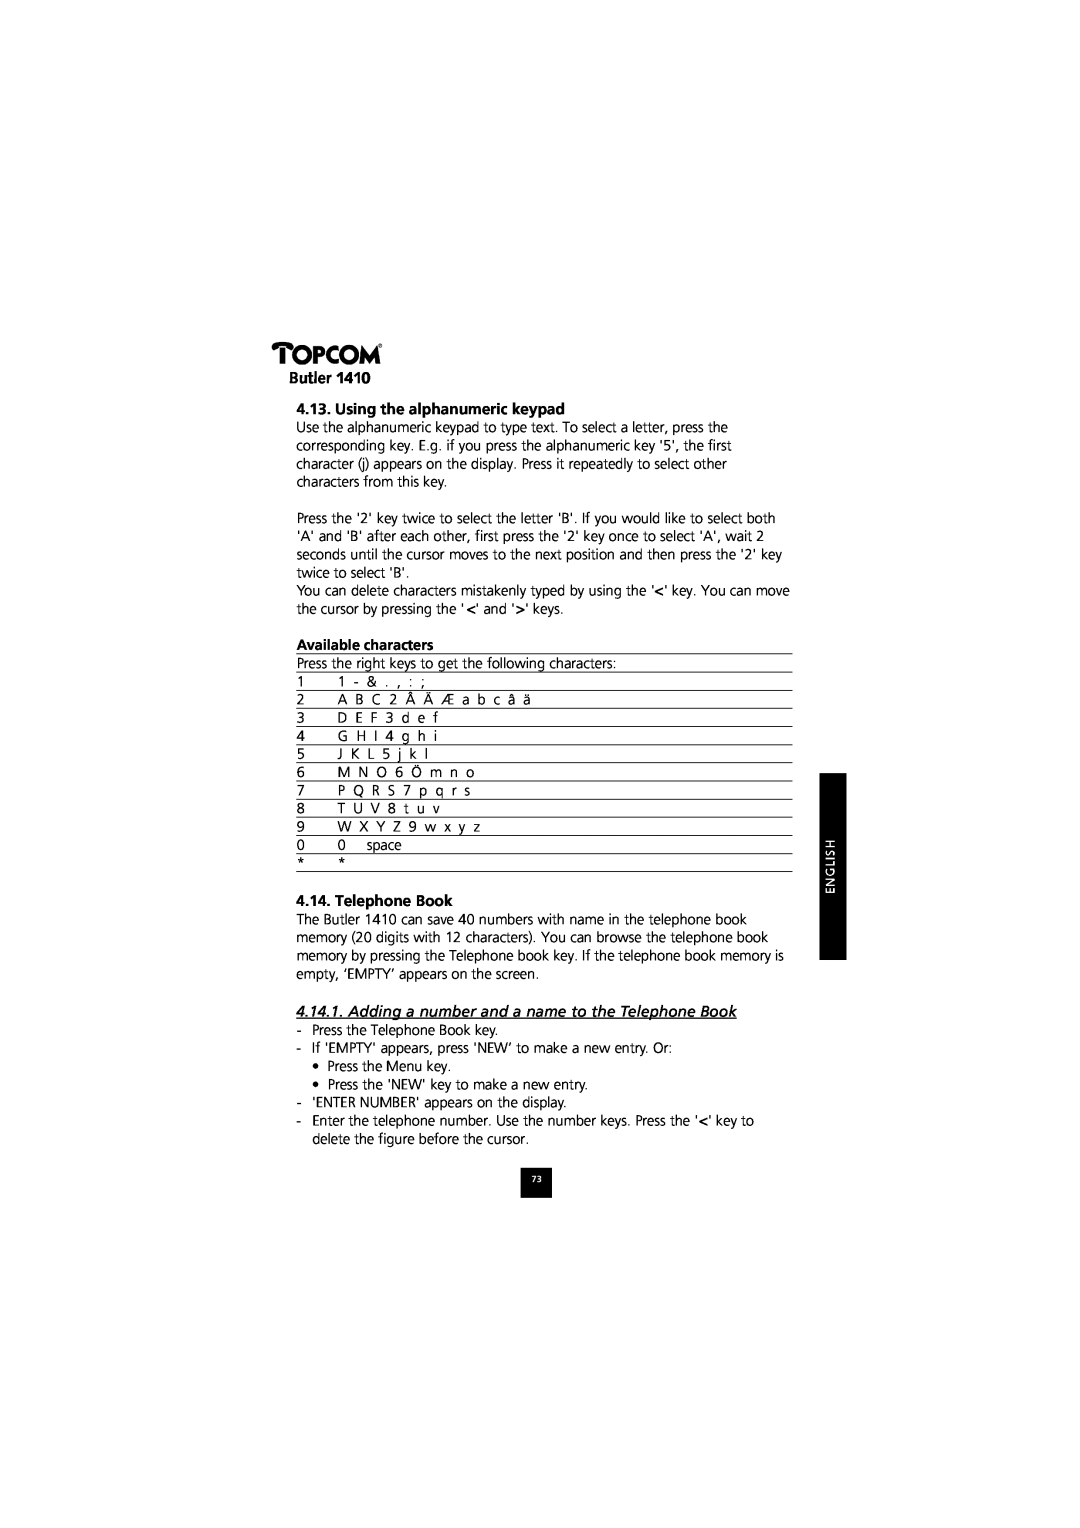 Topcom 1410 manual Using the alphanumeric keypad, Available characters, Telephone Book, Butler 